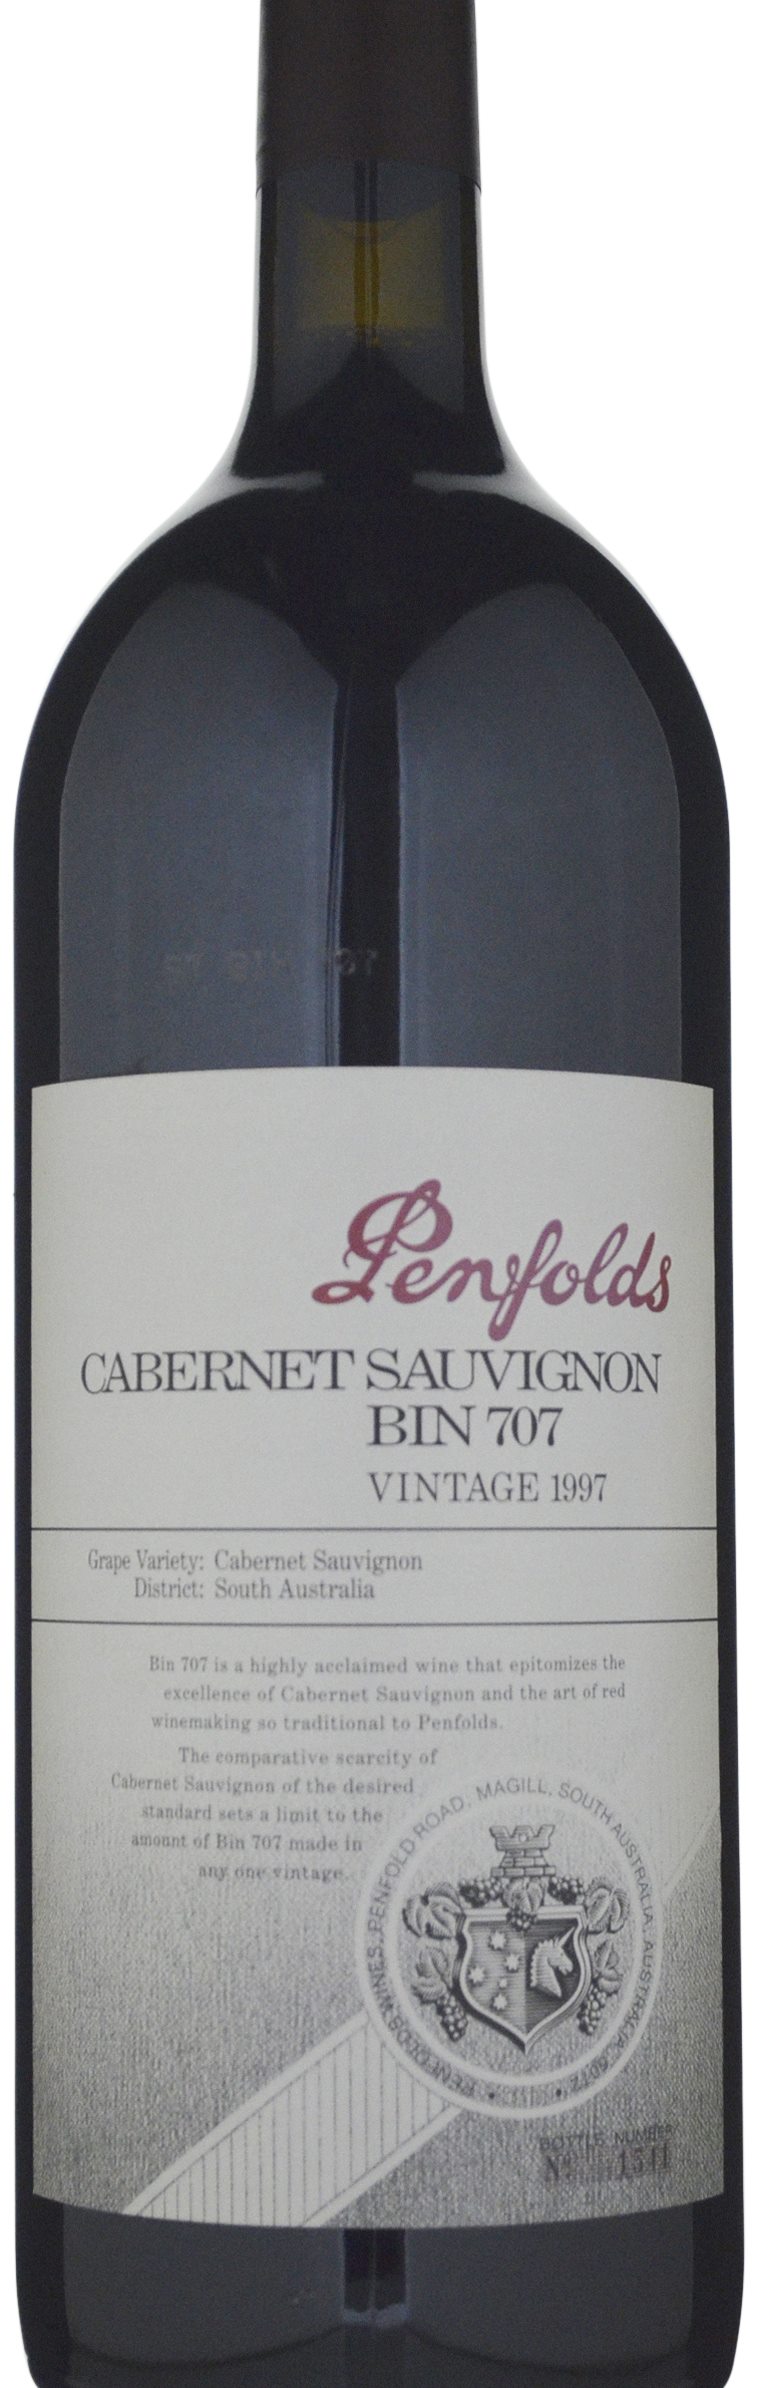 Penfolds Bin 707 Cabernet Sauvignon 1997